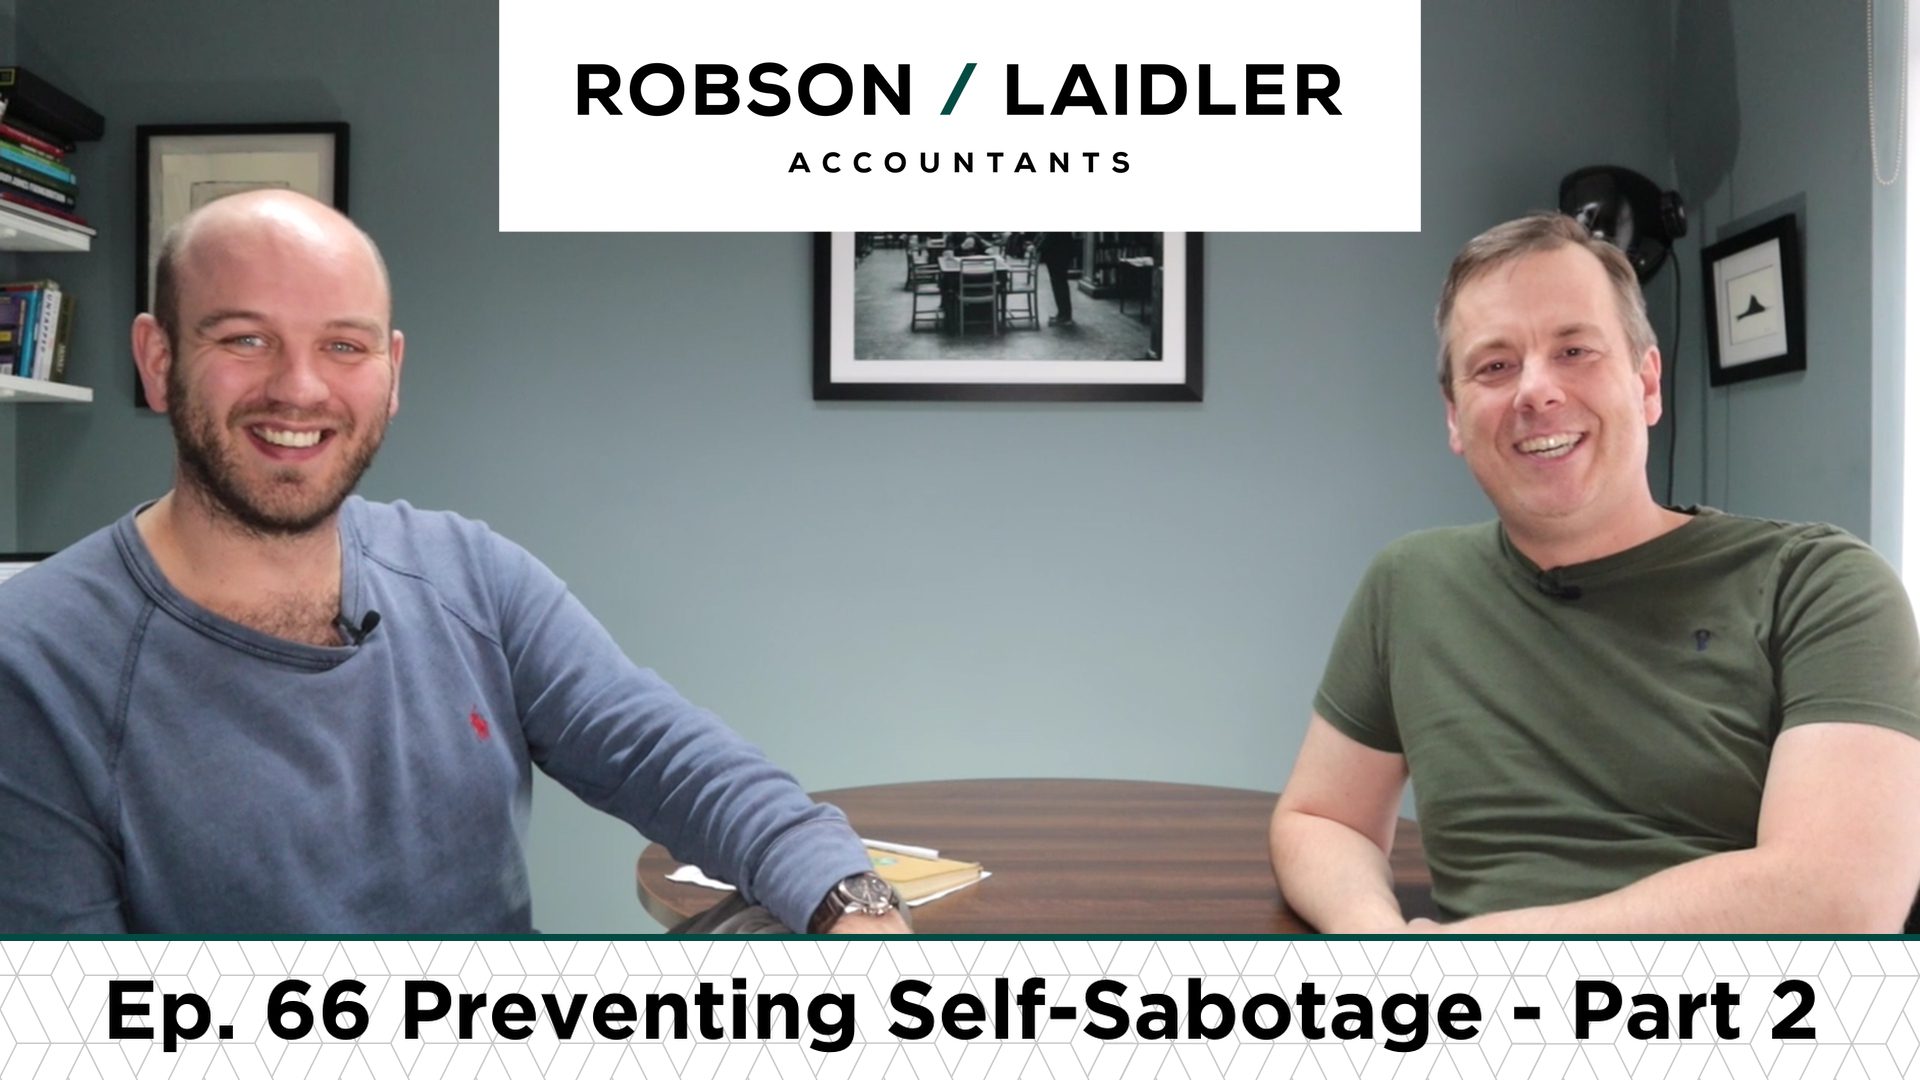 Prevent self-sabotage podcast